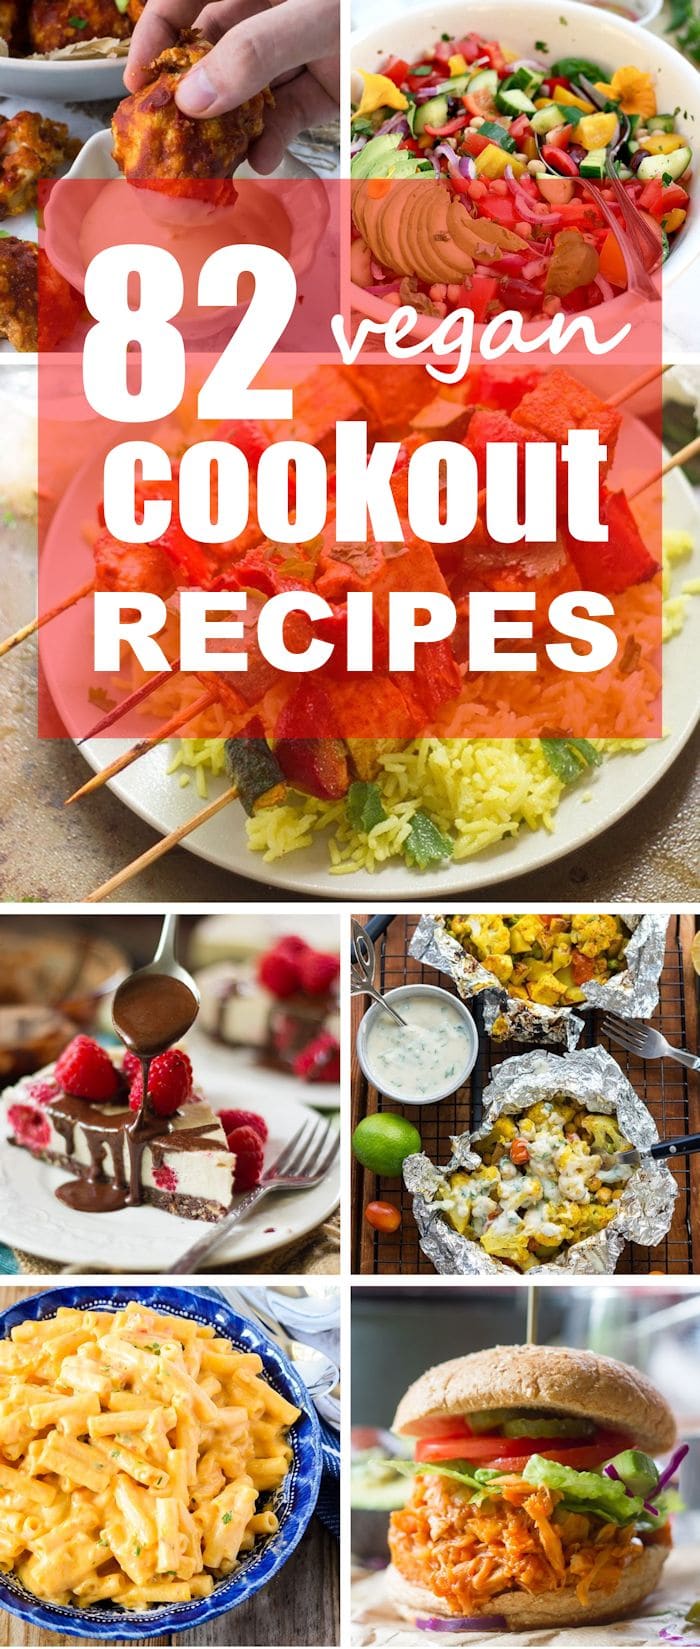 82 Vegan Cookout Recipes